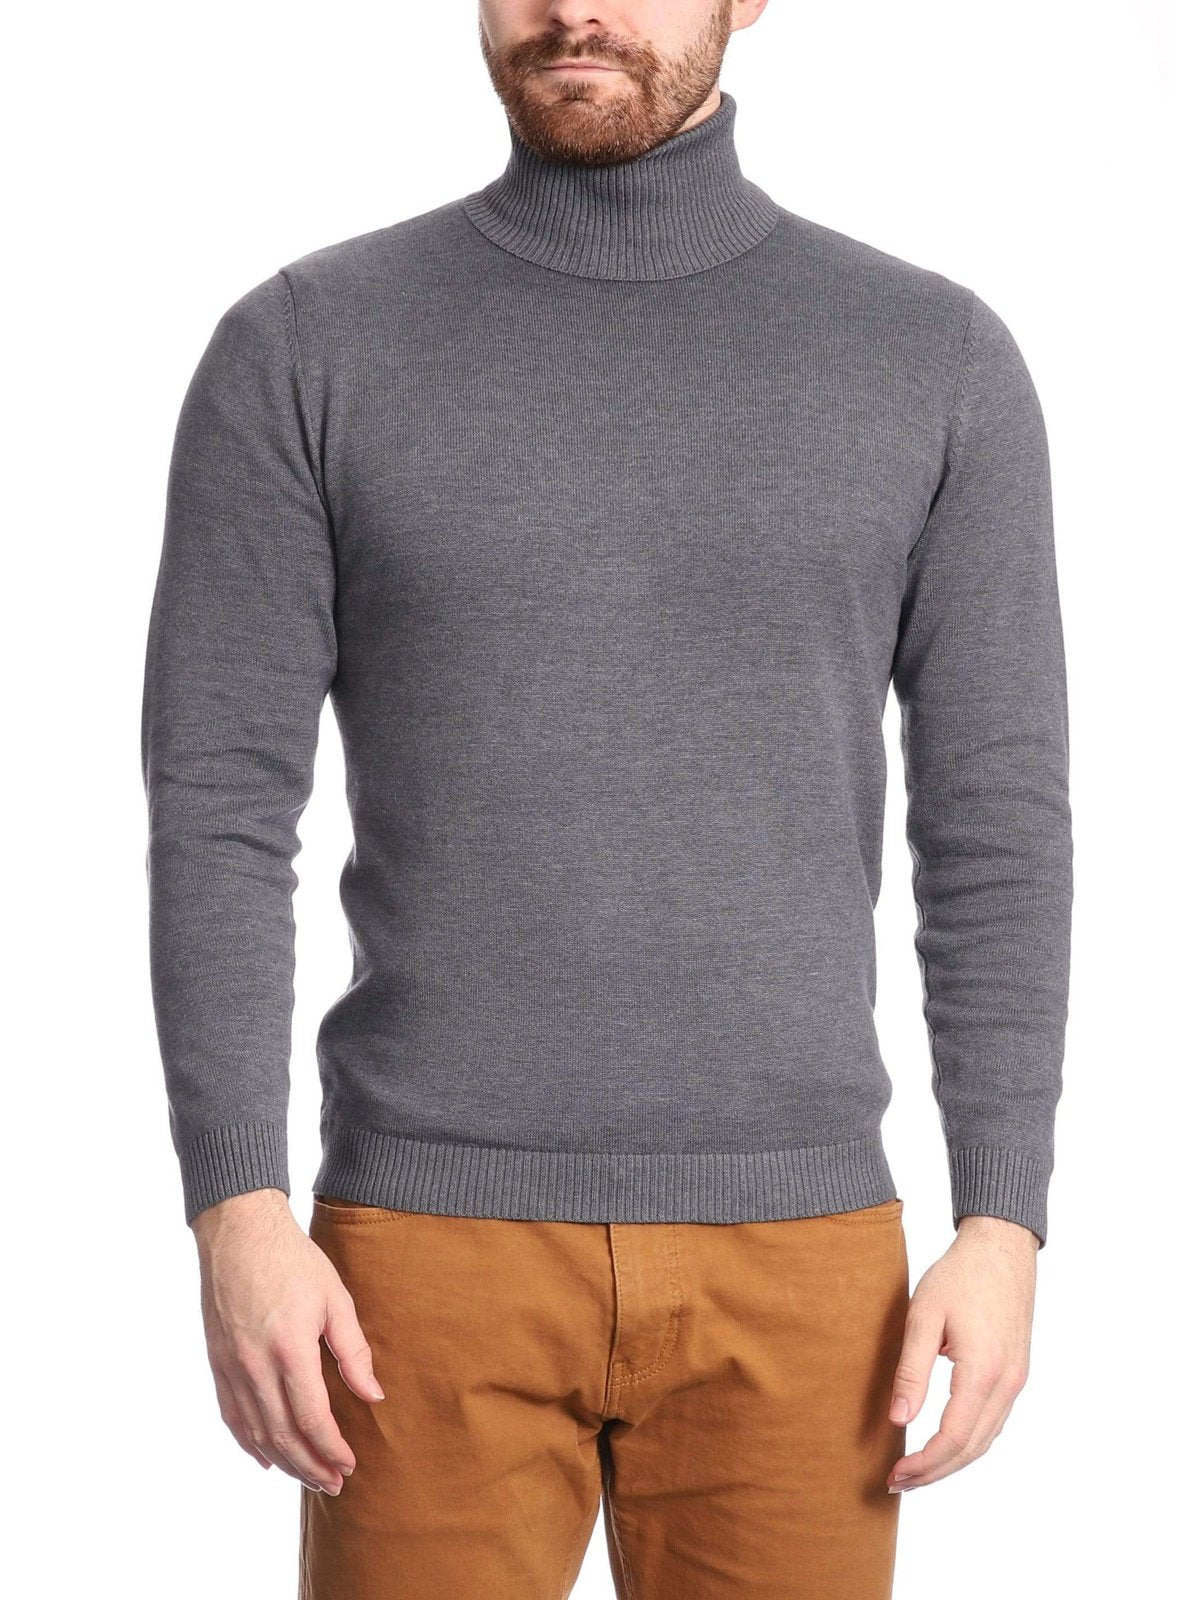 Arthur Black Default Category Migrated Gray / L Arthur Black Men's Solid Gray Pullover Cotton Blend Turtleneck Sweater Shirt